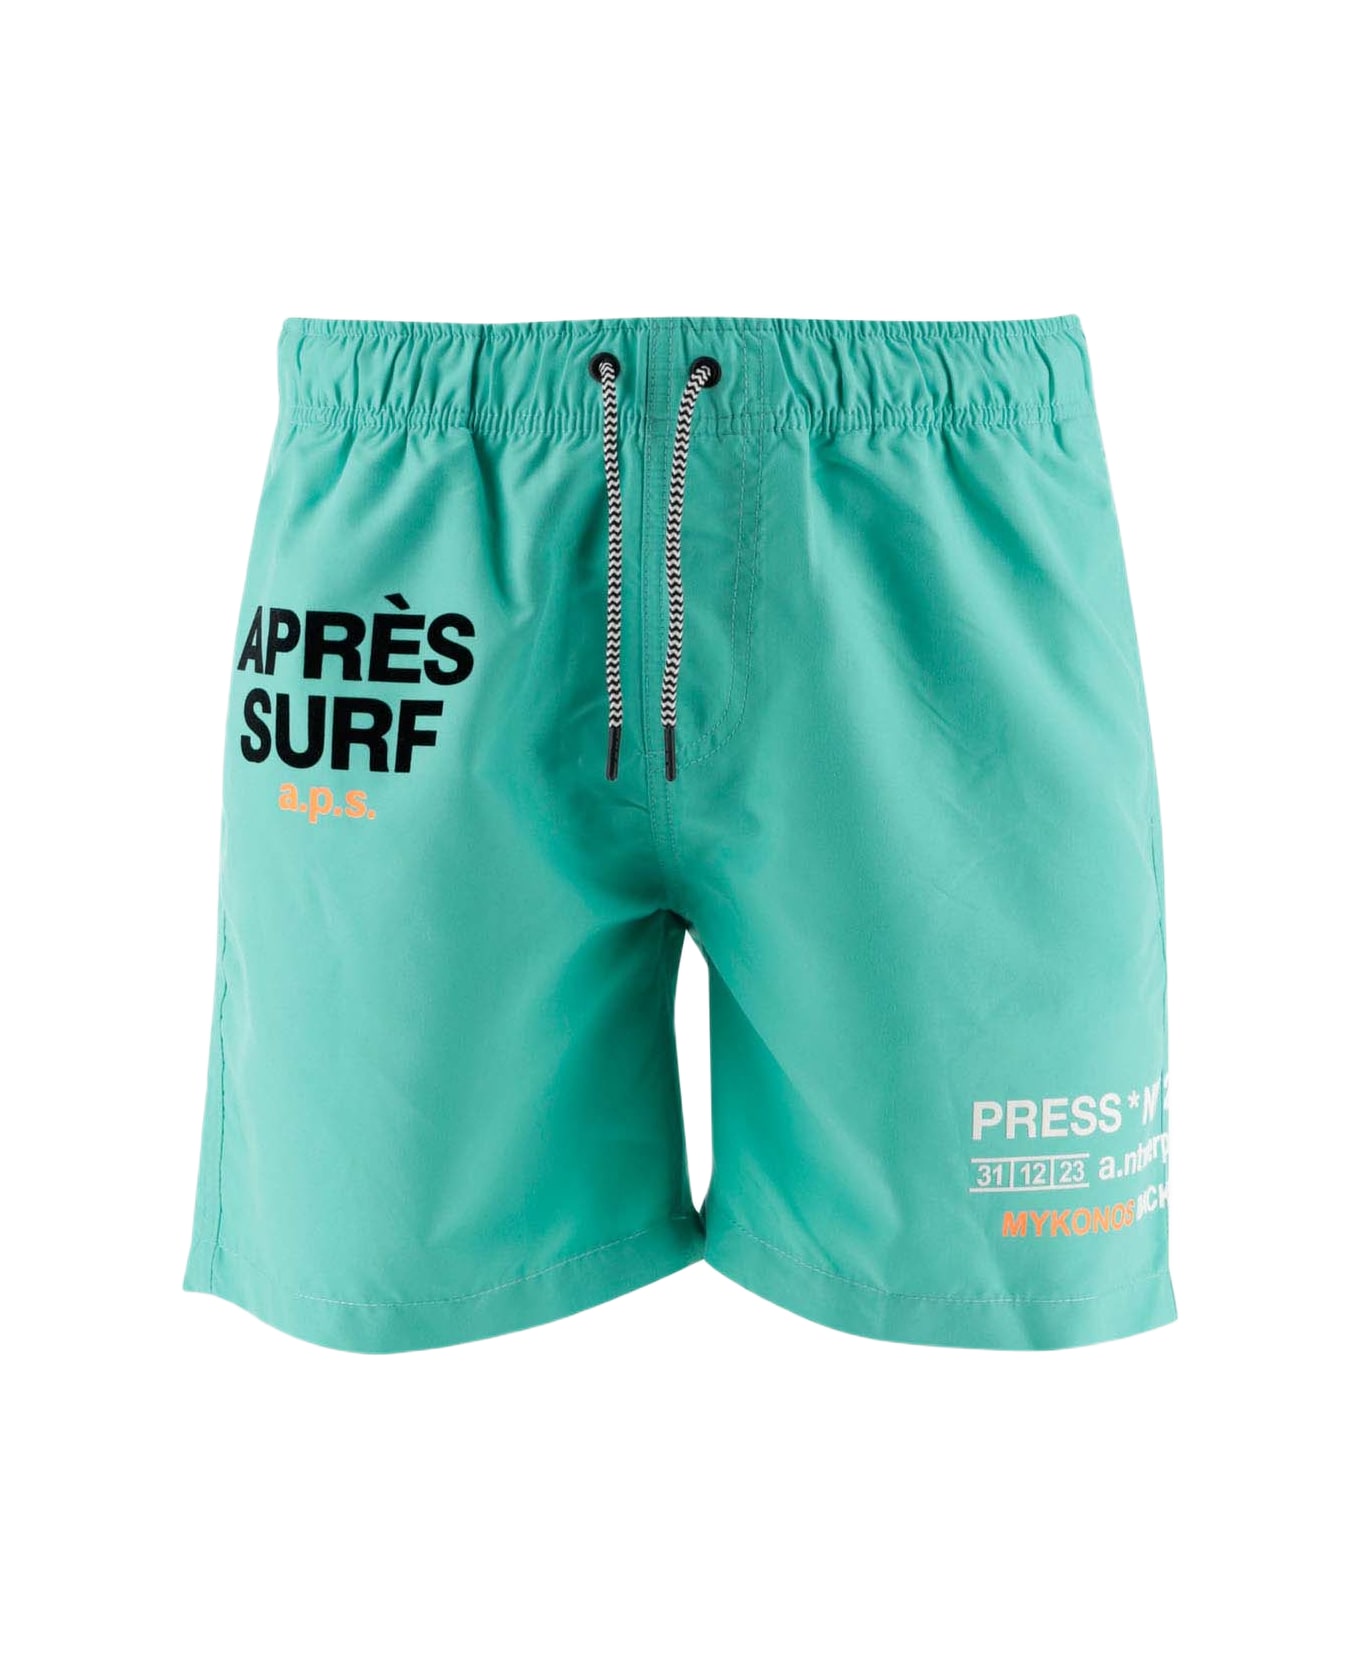 Apres Surf Nylon Swimsuit With Logo - Turquoise